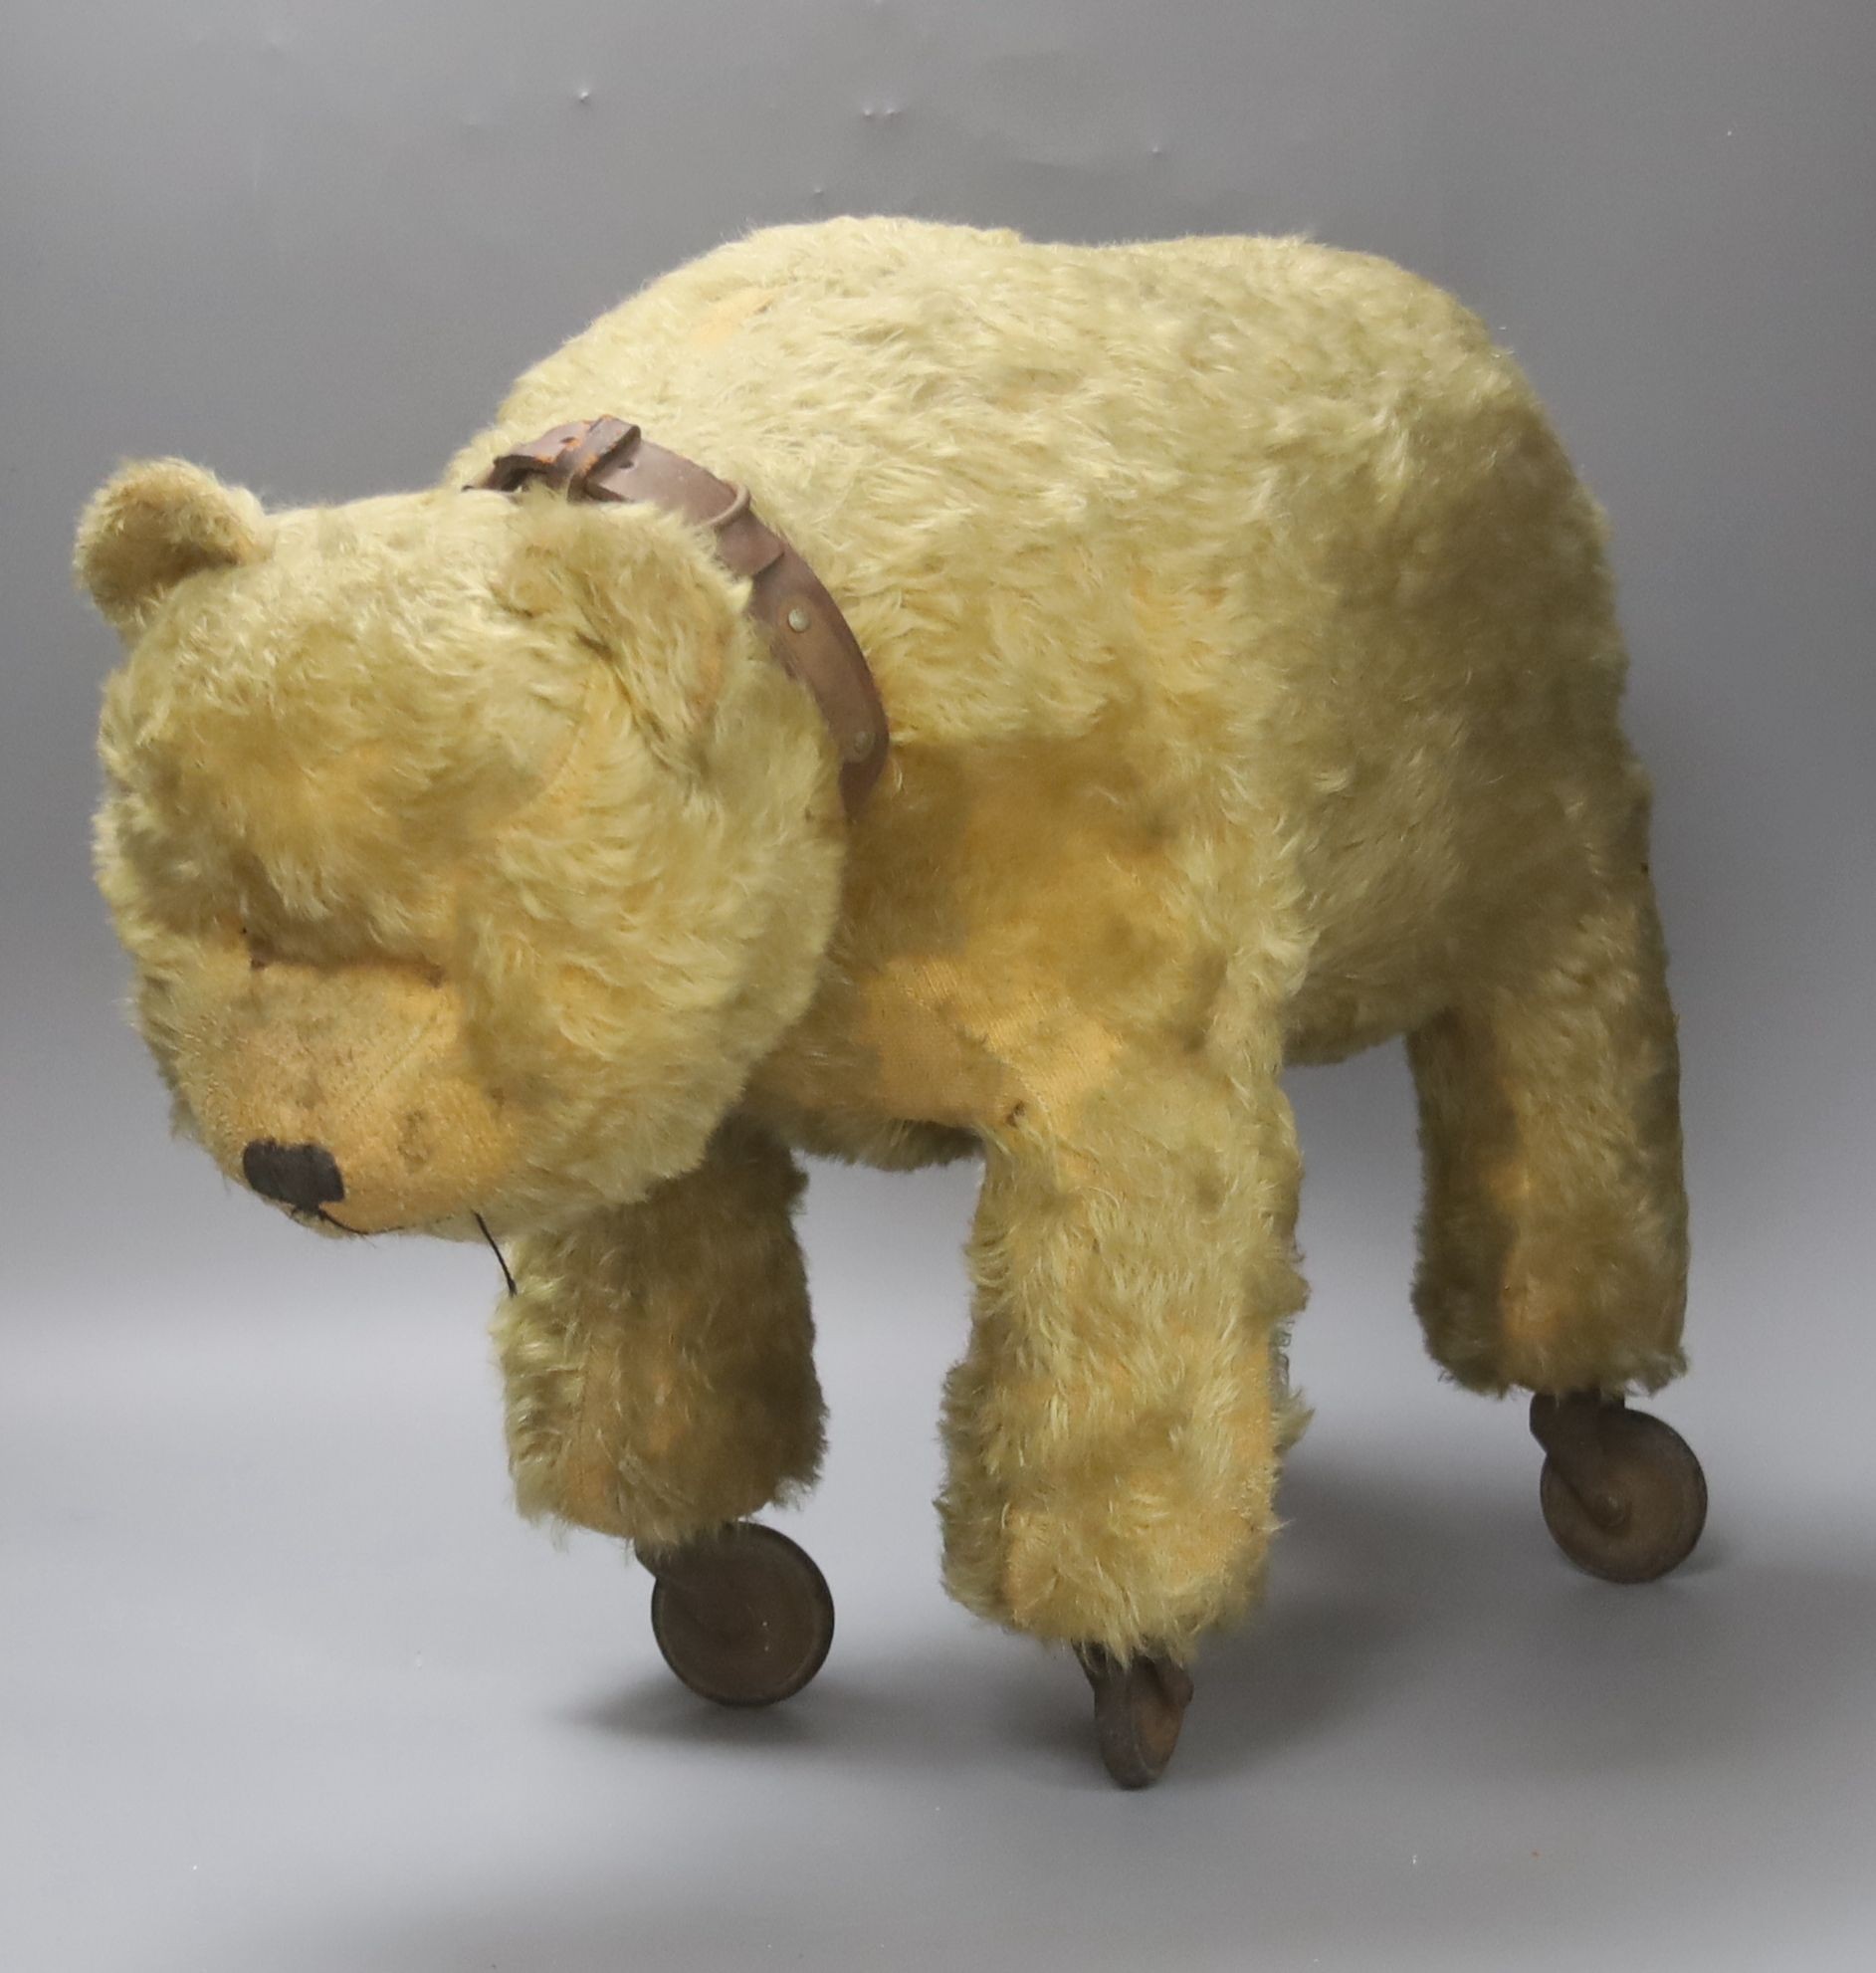 A blonde plush bear on wheels (put on later) 55cm